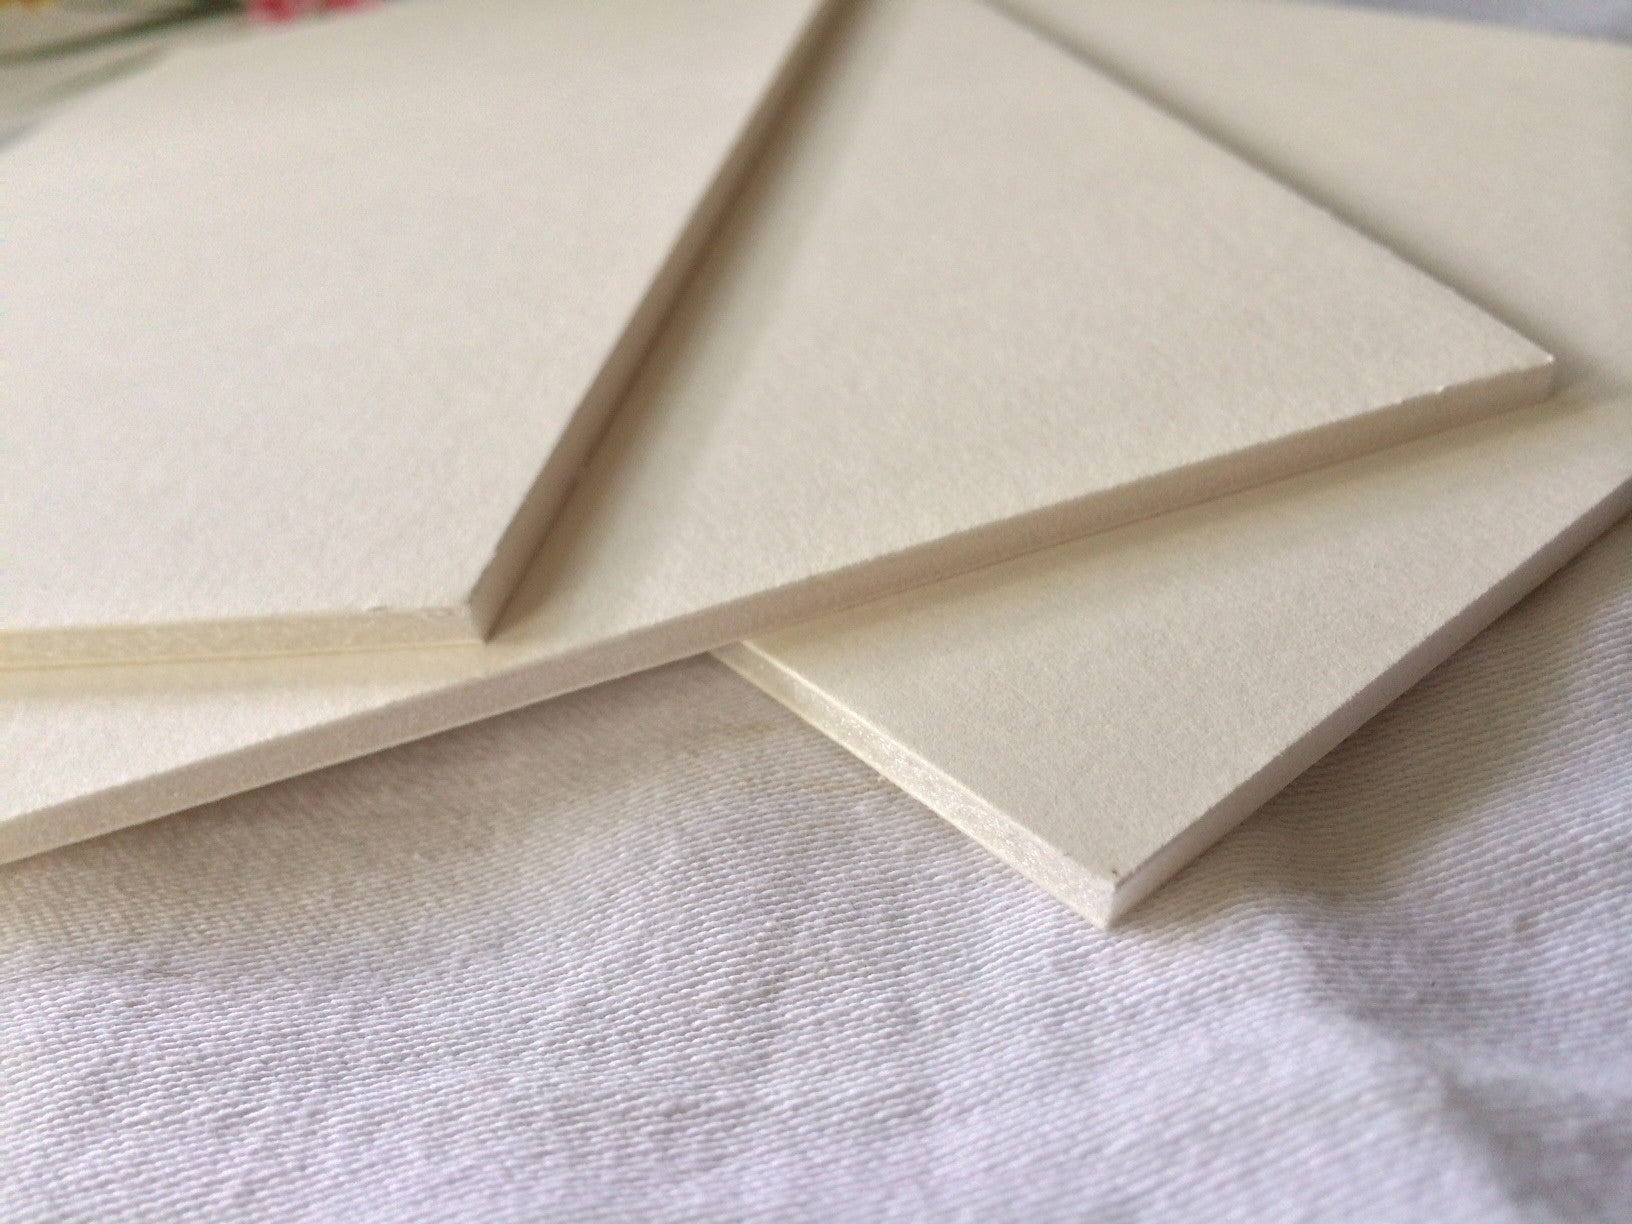 Three 5 x 7-inch foam core boards for mounting – Subversive Cross